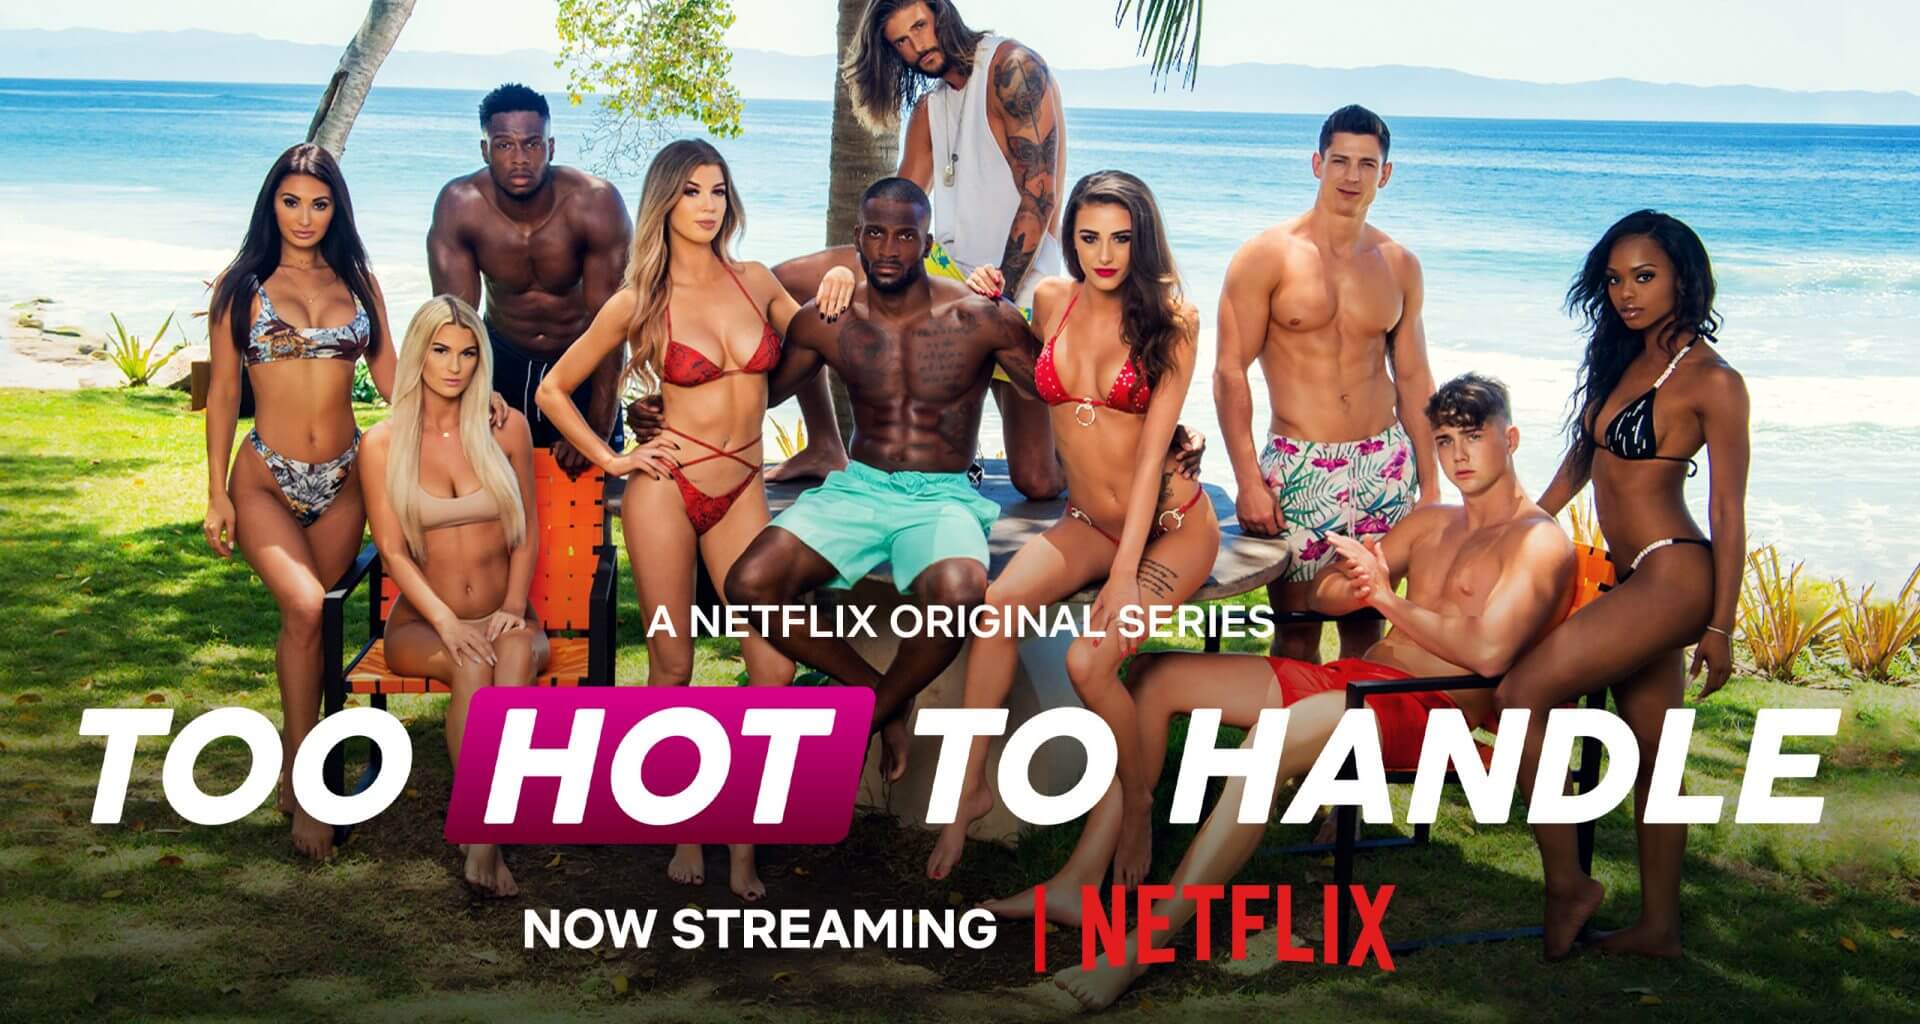 too hot to handle season 3 Trailer